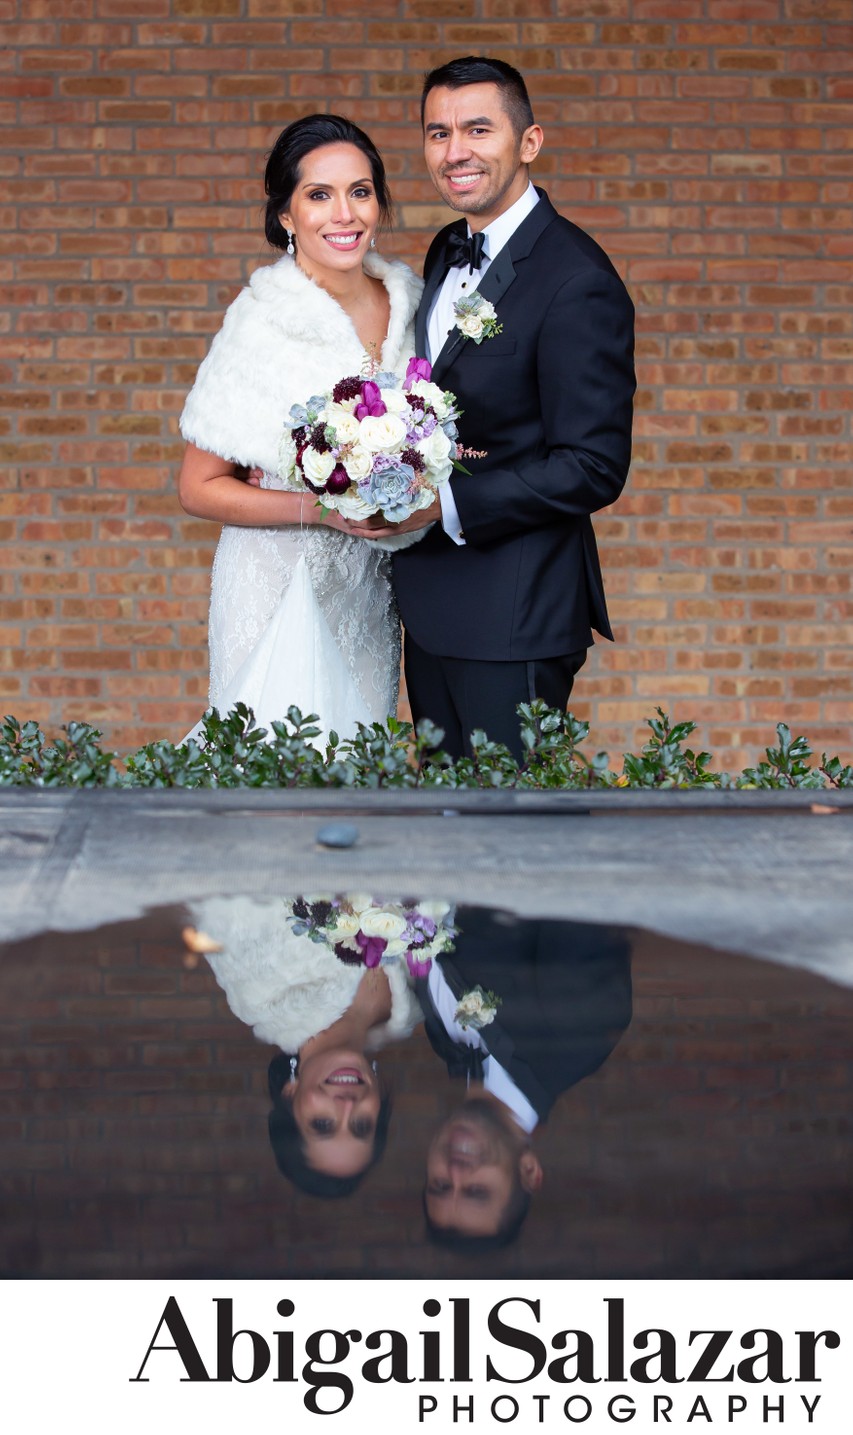 Chicago Botanic Garden wedding: Couples’ reflection 